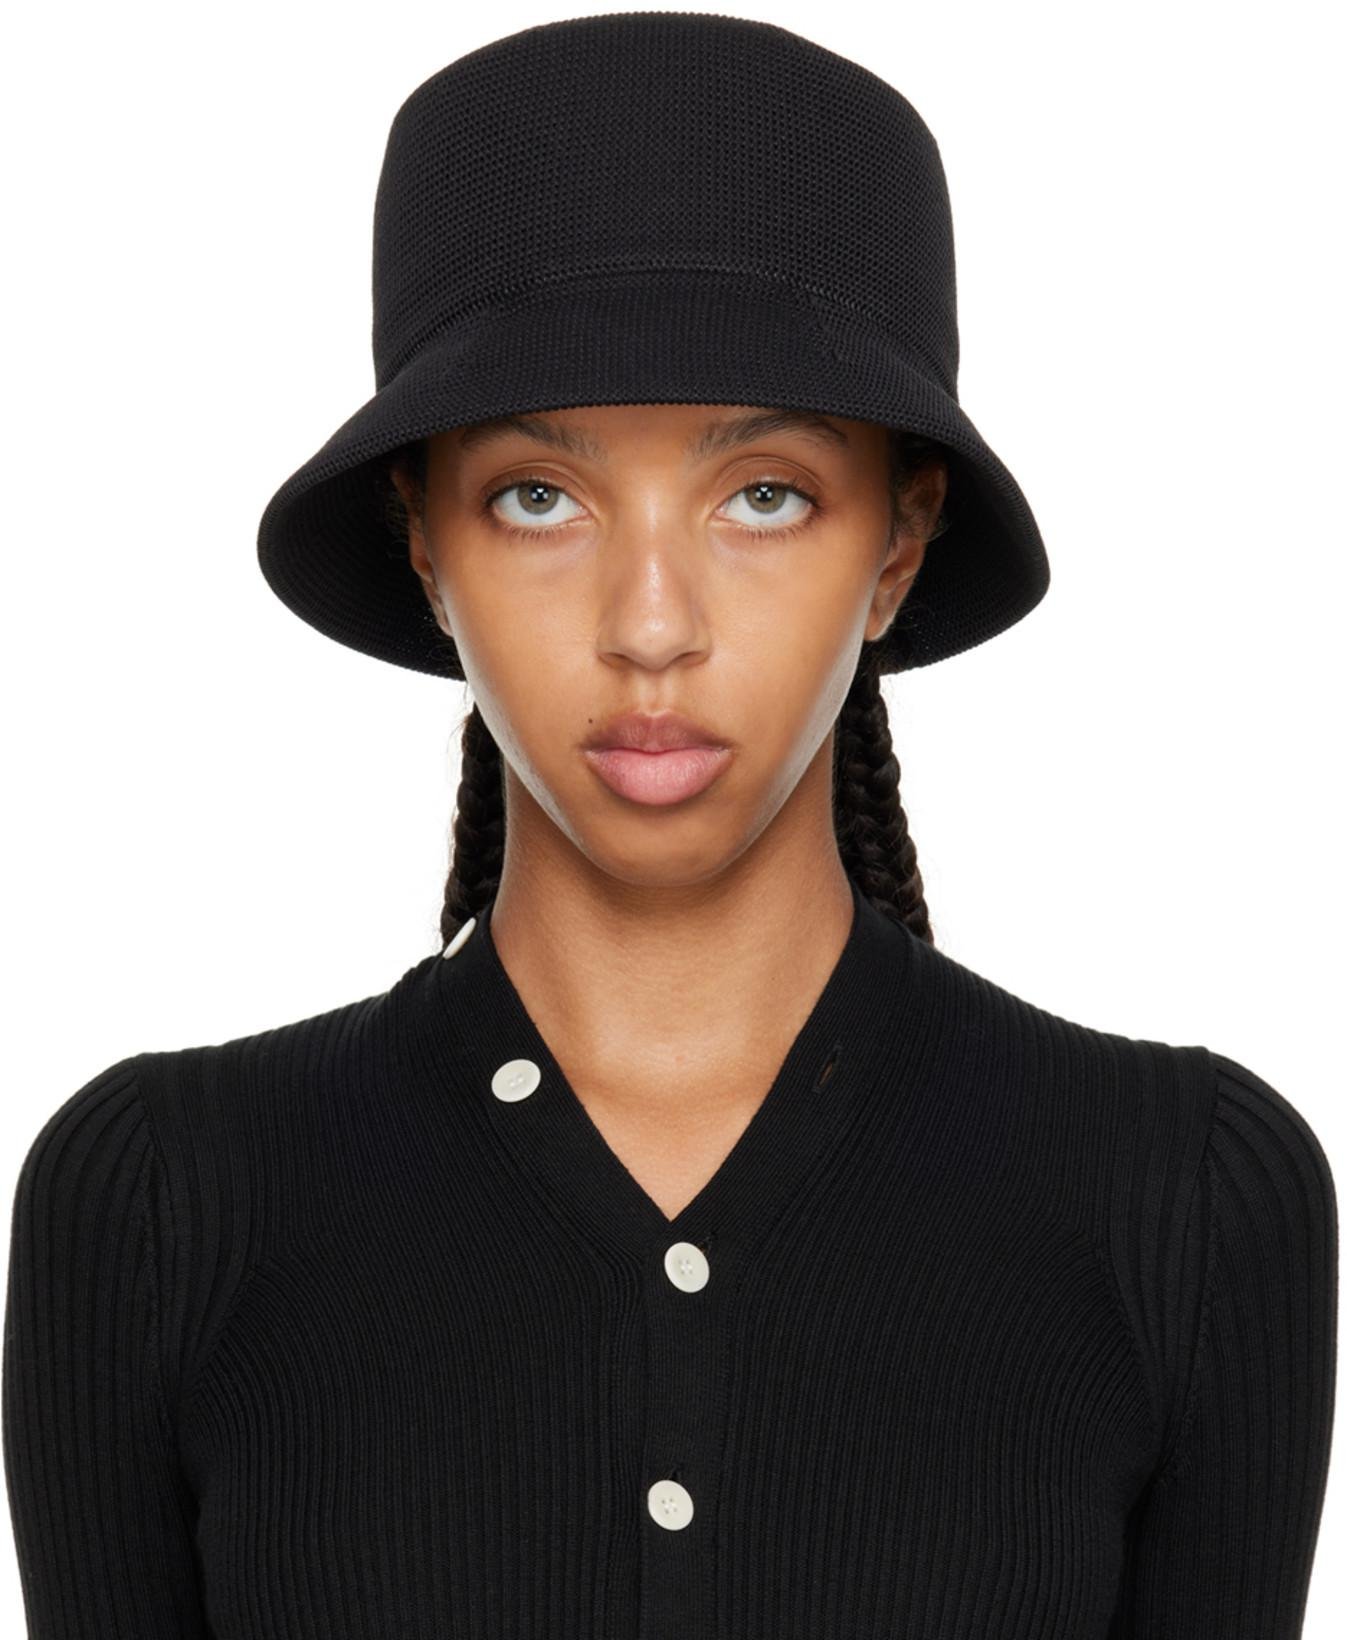 Black Mesh Knit Beach Hat by CFCL